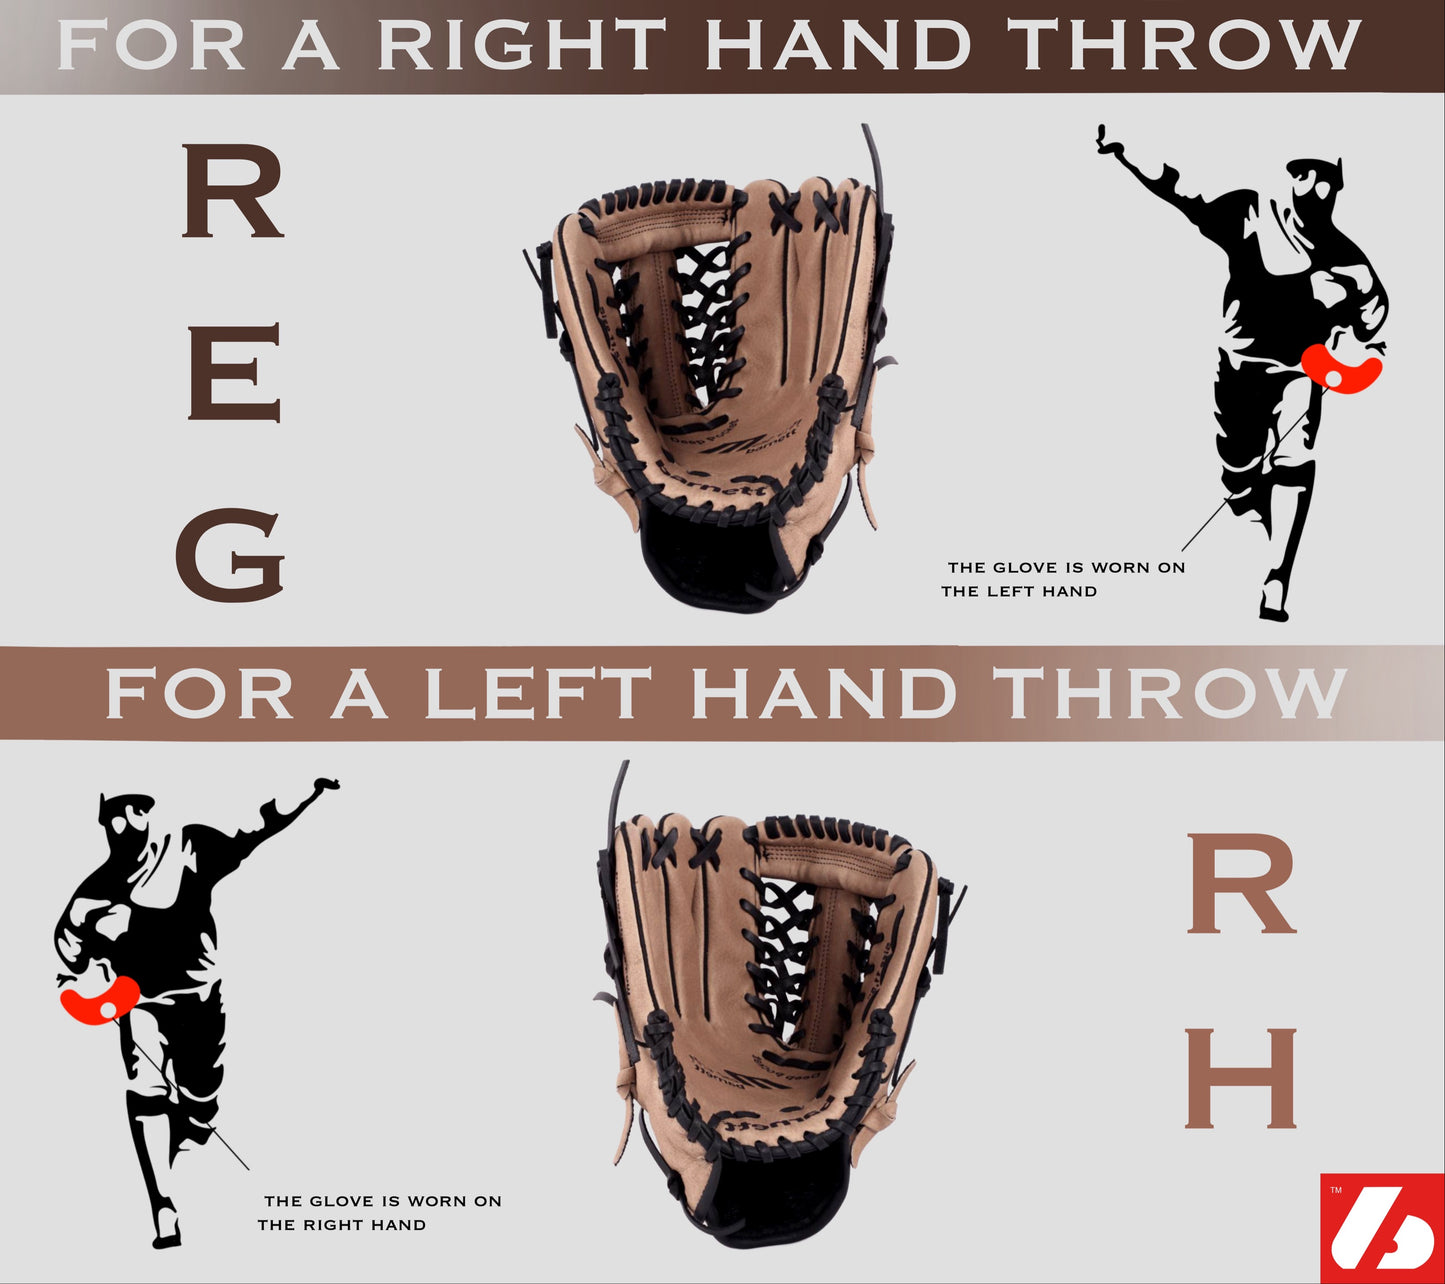 FL-117 high quality baseball and softball glove, leather, infield / fastpitch 11.7, light grey